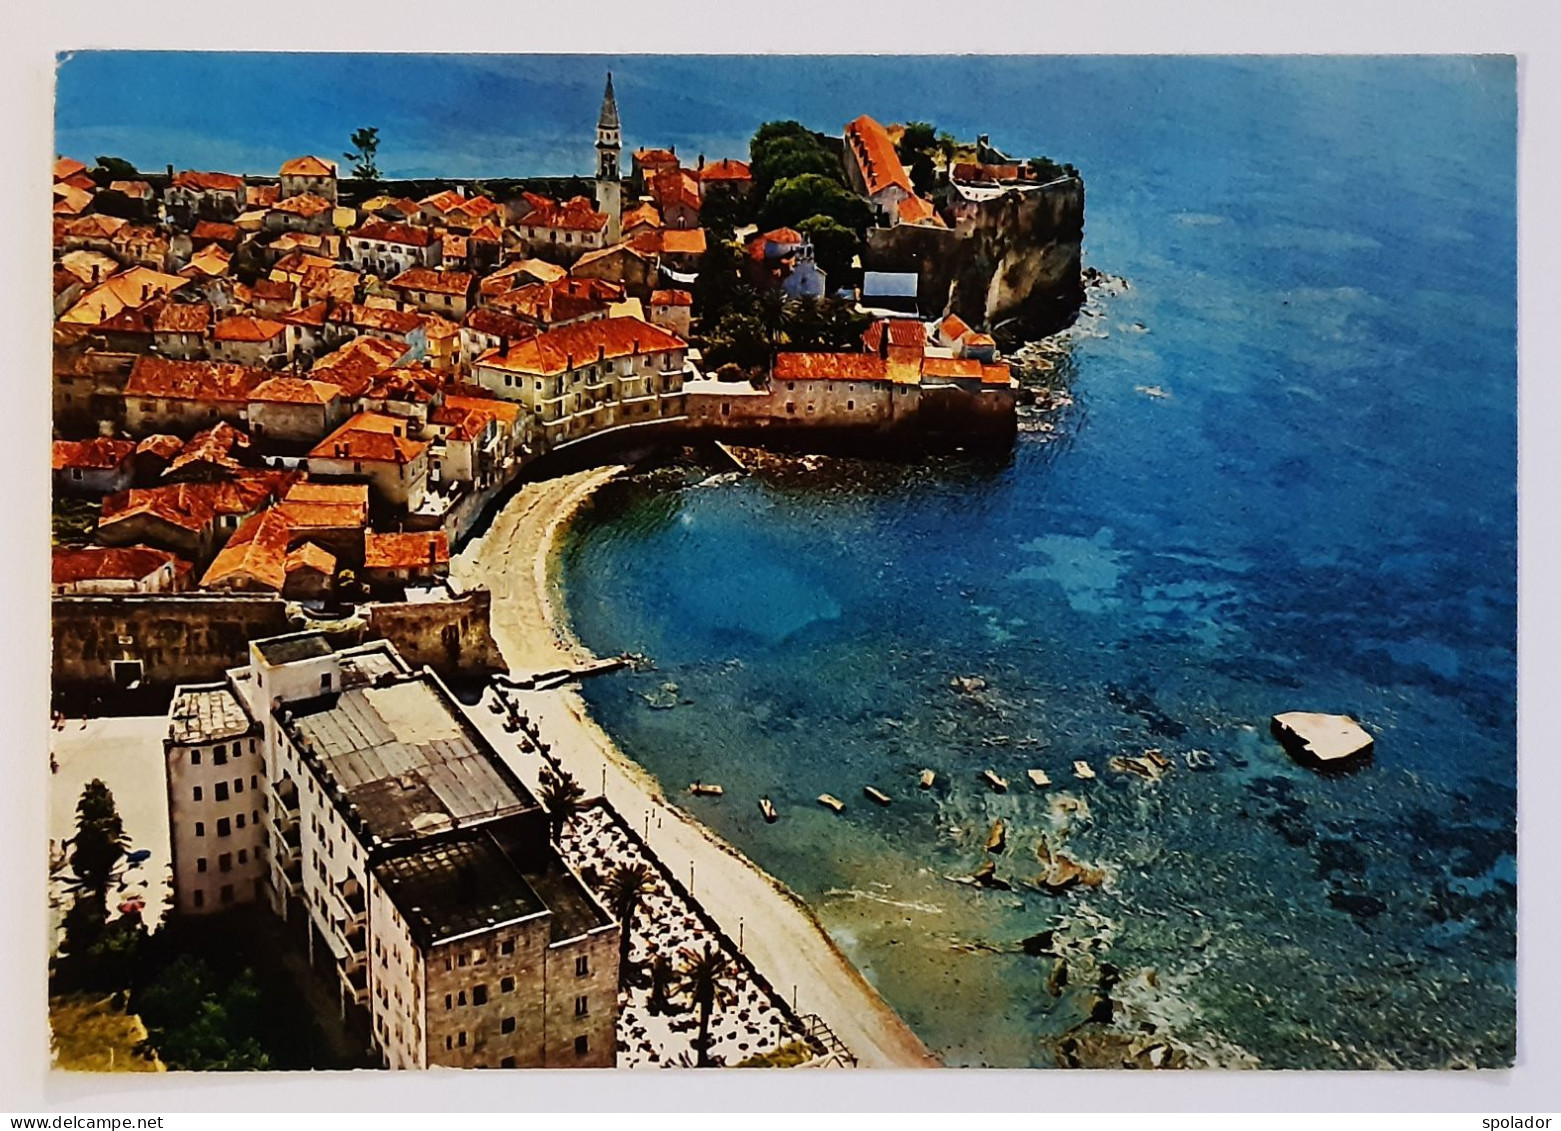 Ex-Yugoslavia-Vintage Photo Postcard-Crna Gora-BUDVA-Town In Montenegro-1973-used With Stamp - Yougoslavie